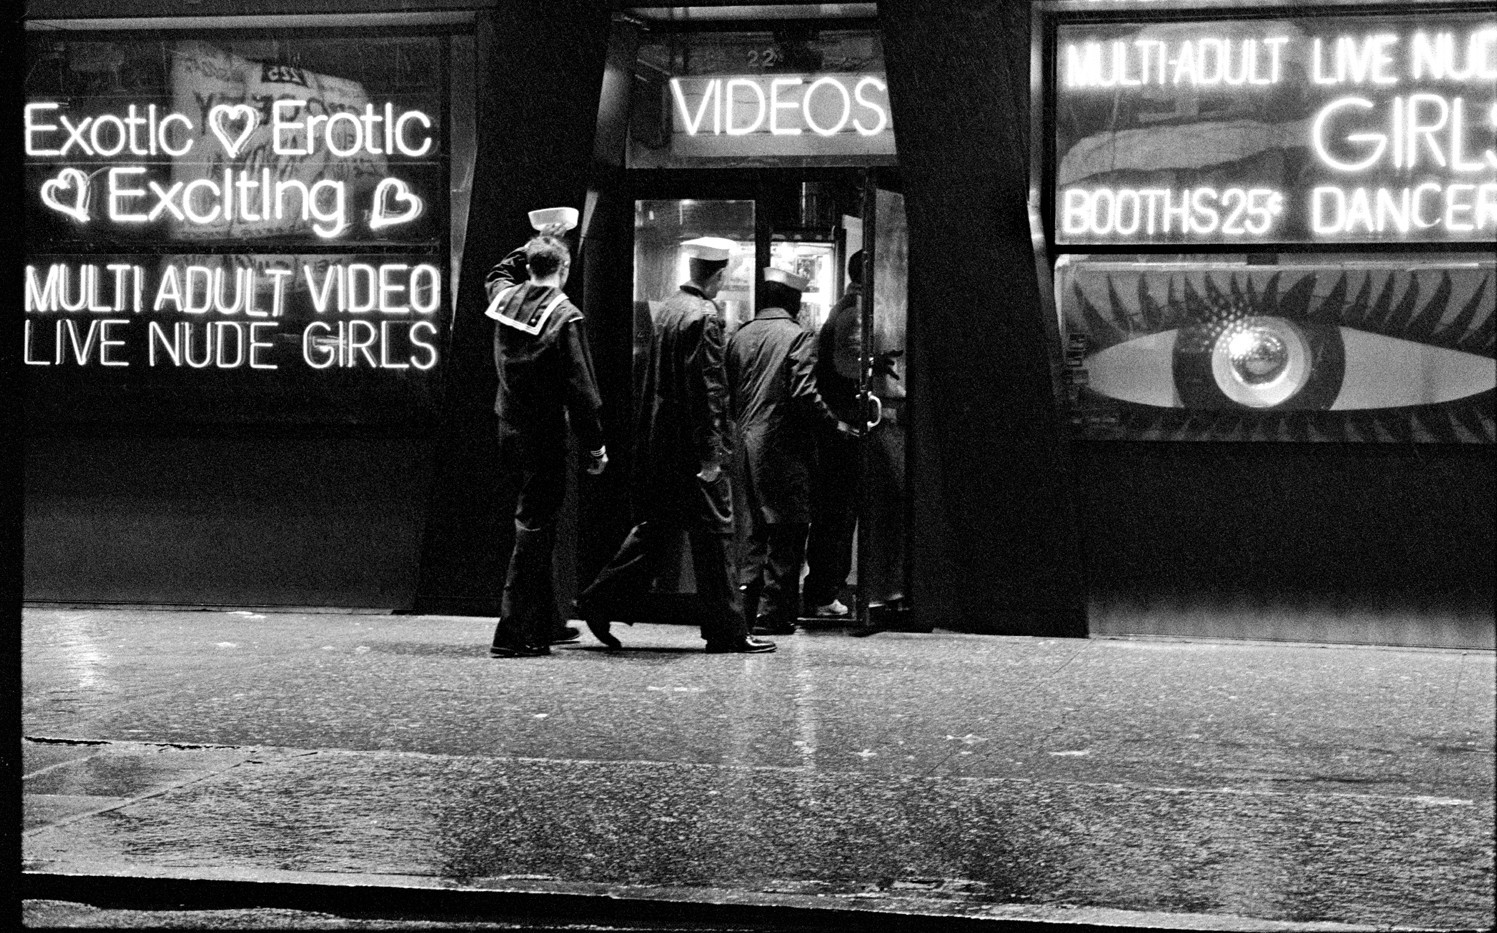 Моряки идут на шоу. 42-я улица, Нью-Йорк, 1989. Фотограф Мэтт Вебер